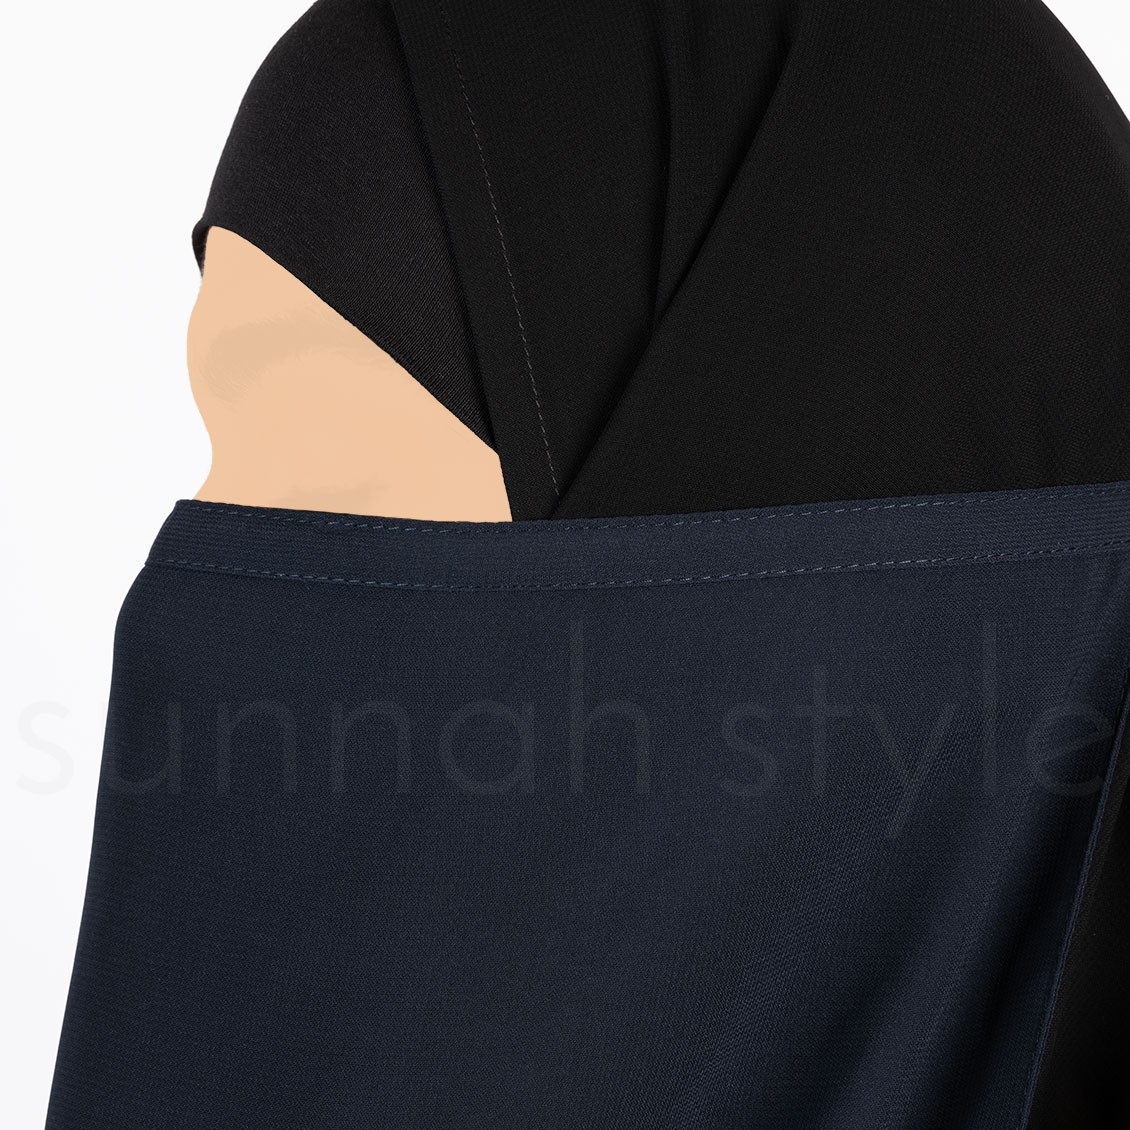 Sunnah Style Long Tying Half Niqab Navy Blue